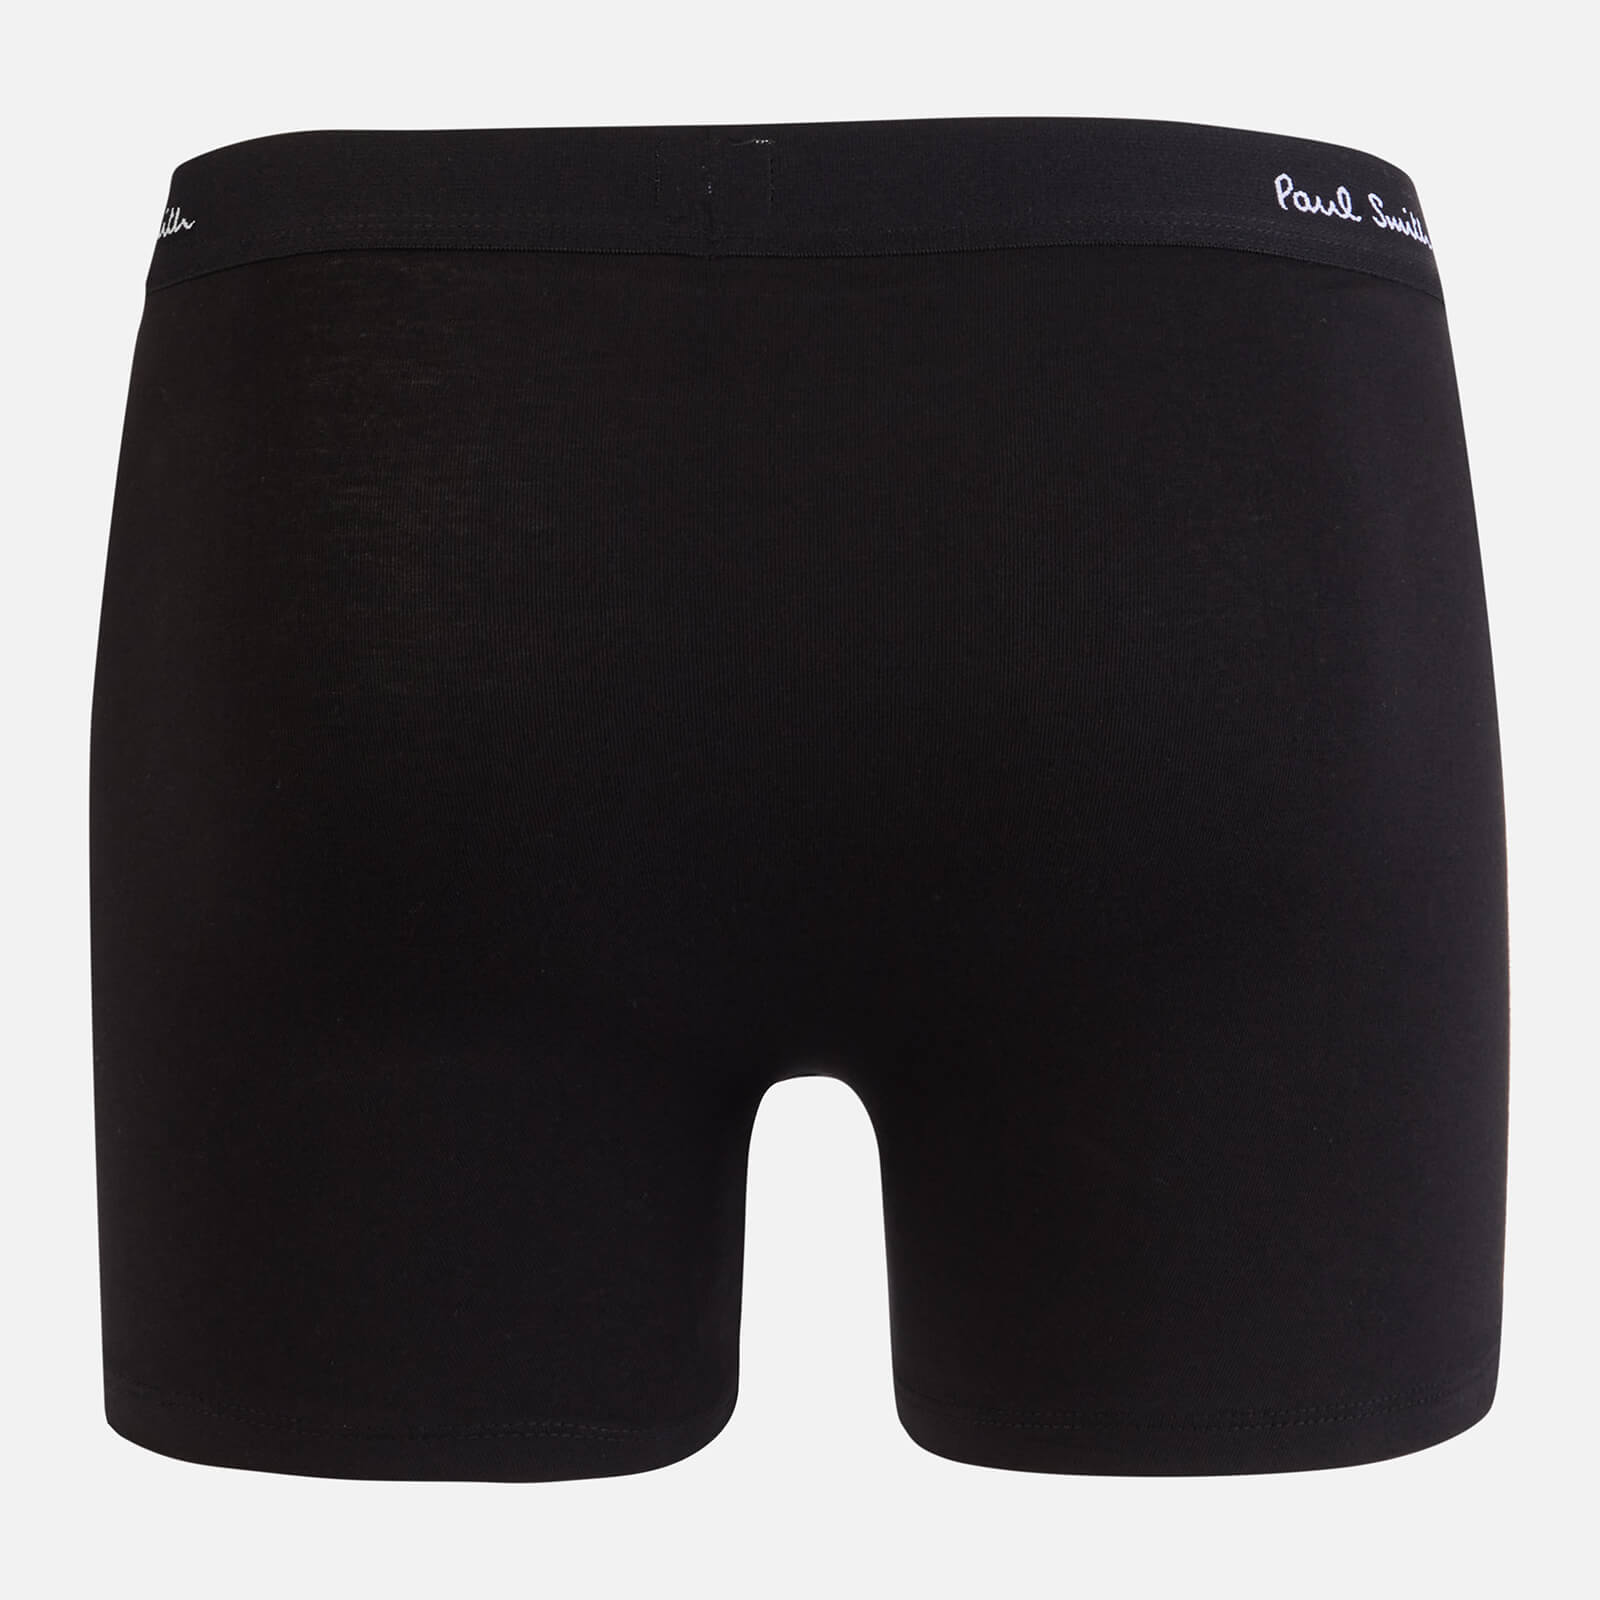 ps paul smith men's 3-pack long trunk boxer shorts - black - s